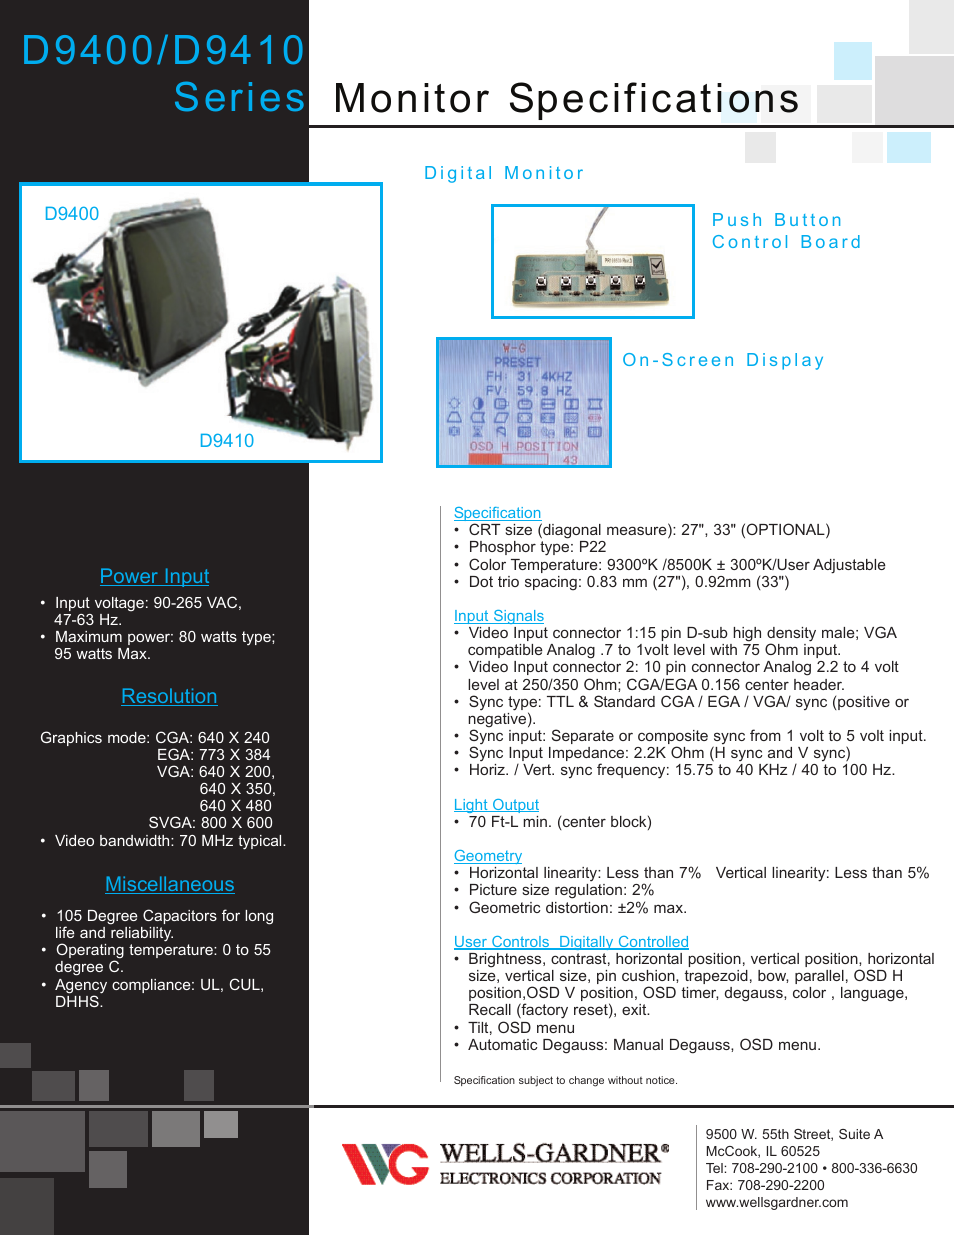 Wells-Gardner D9410 User Manual | 2 pages